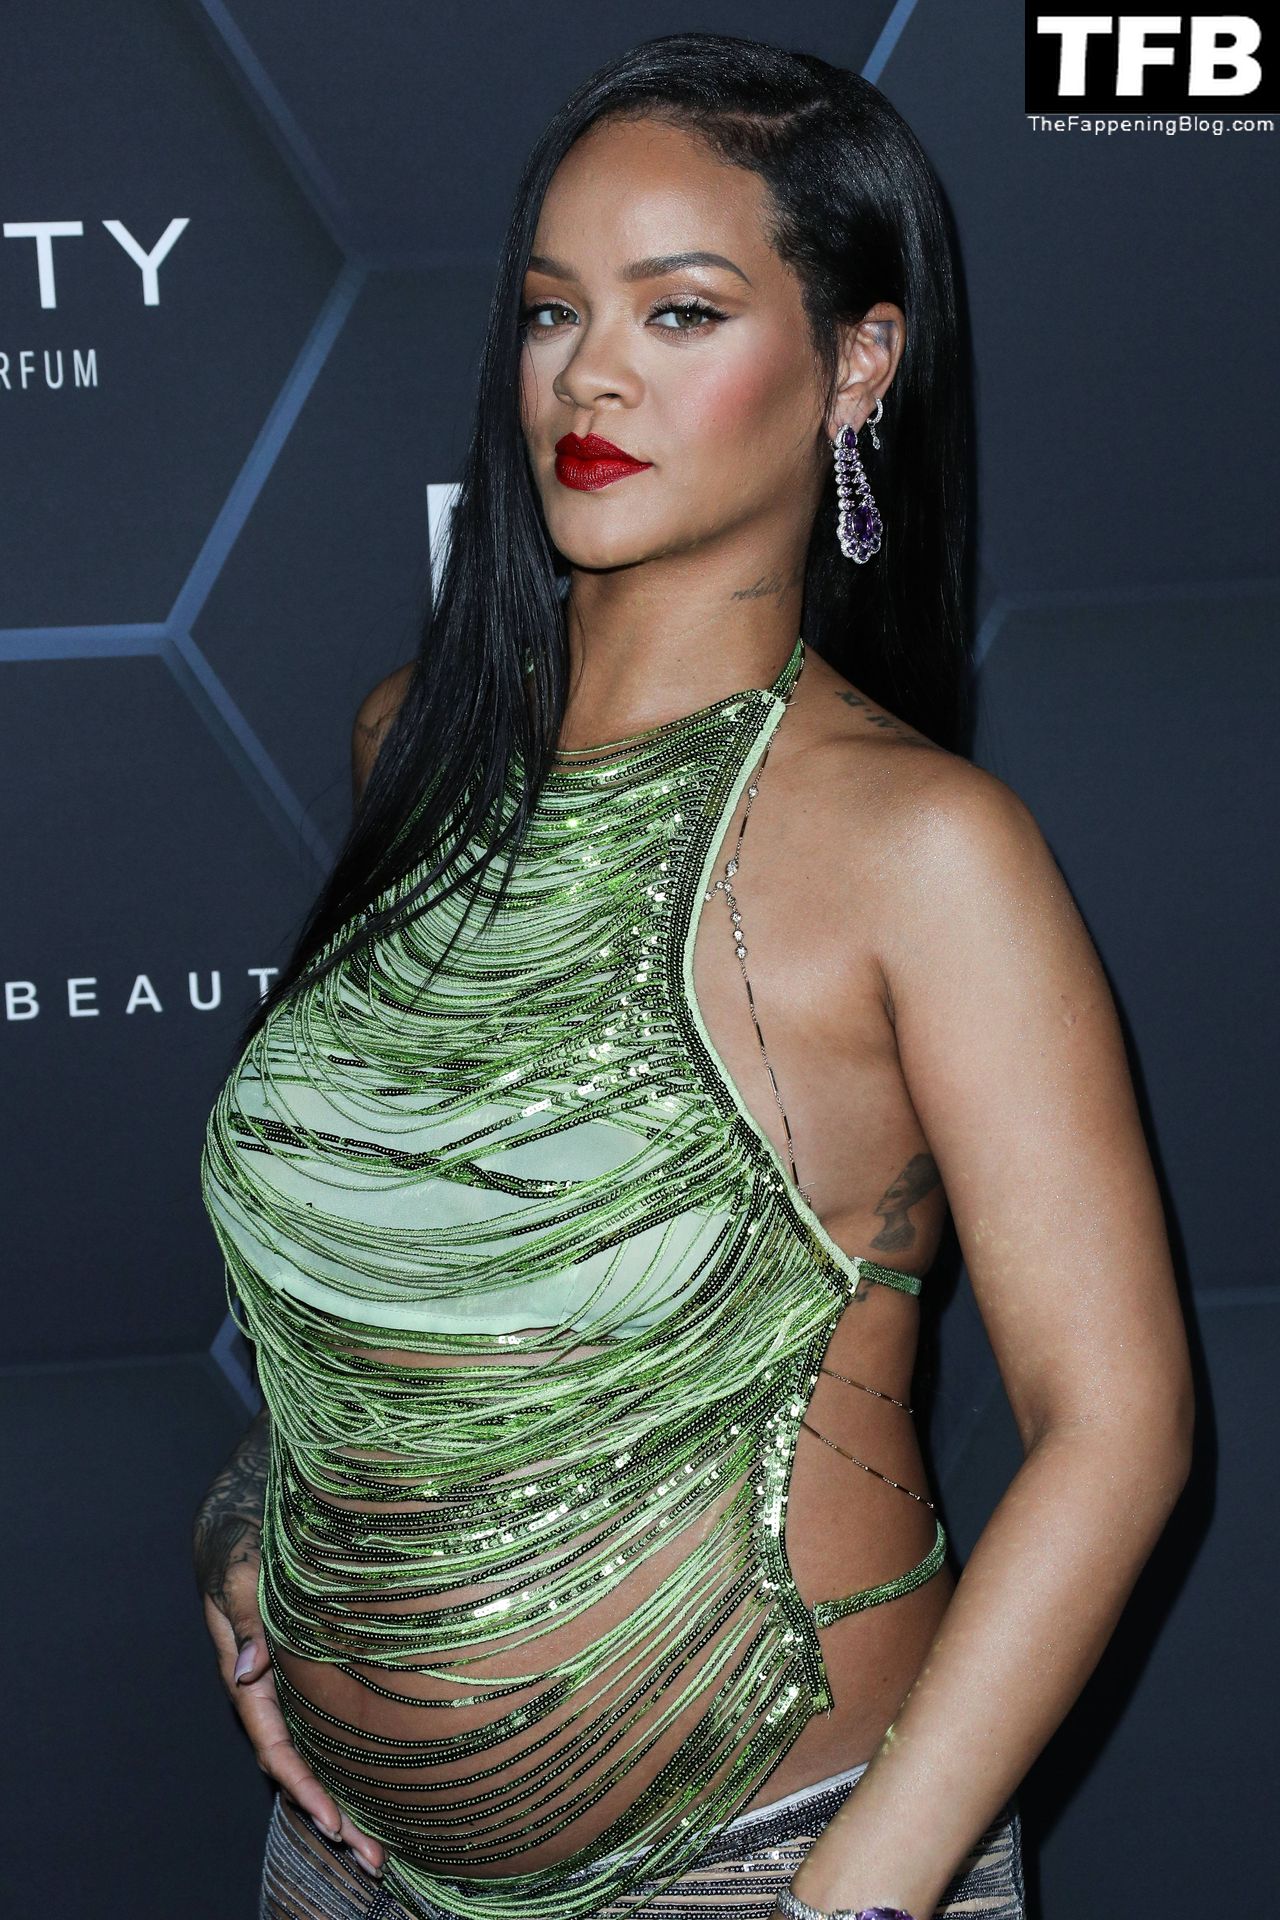 Rihanna-Sexy-The-Fappening-Blog-149.jpg